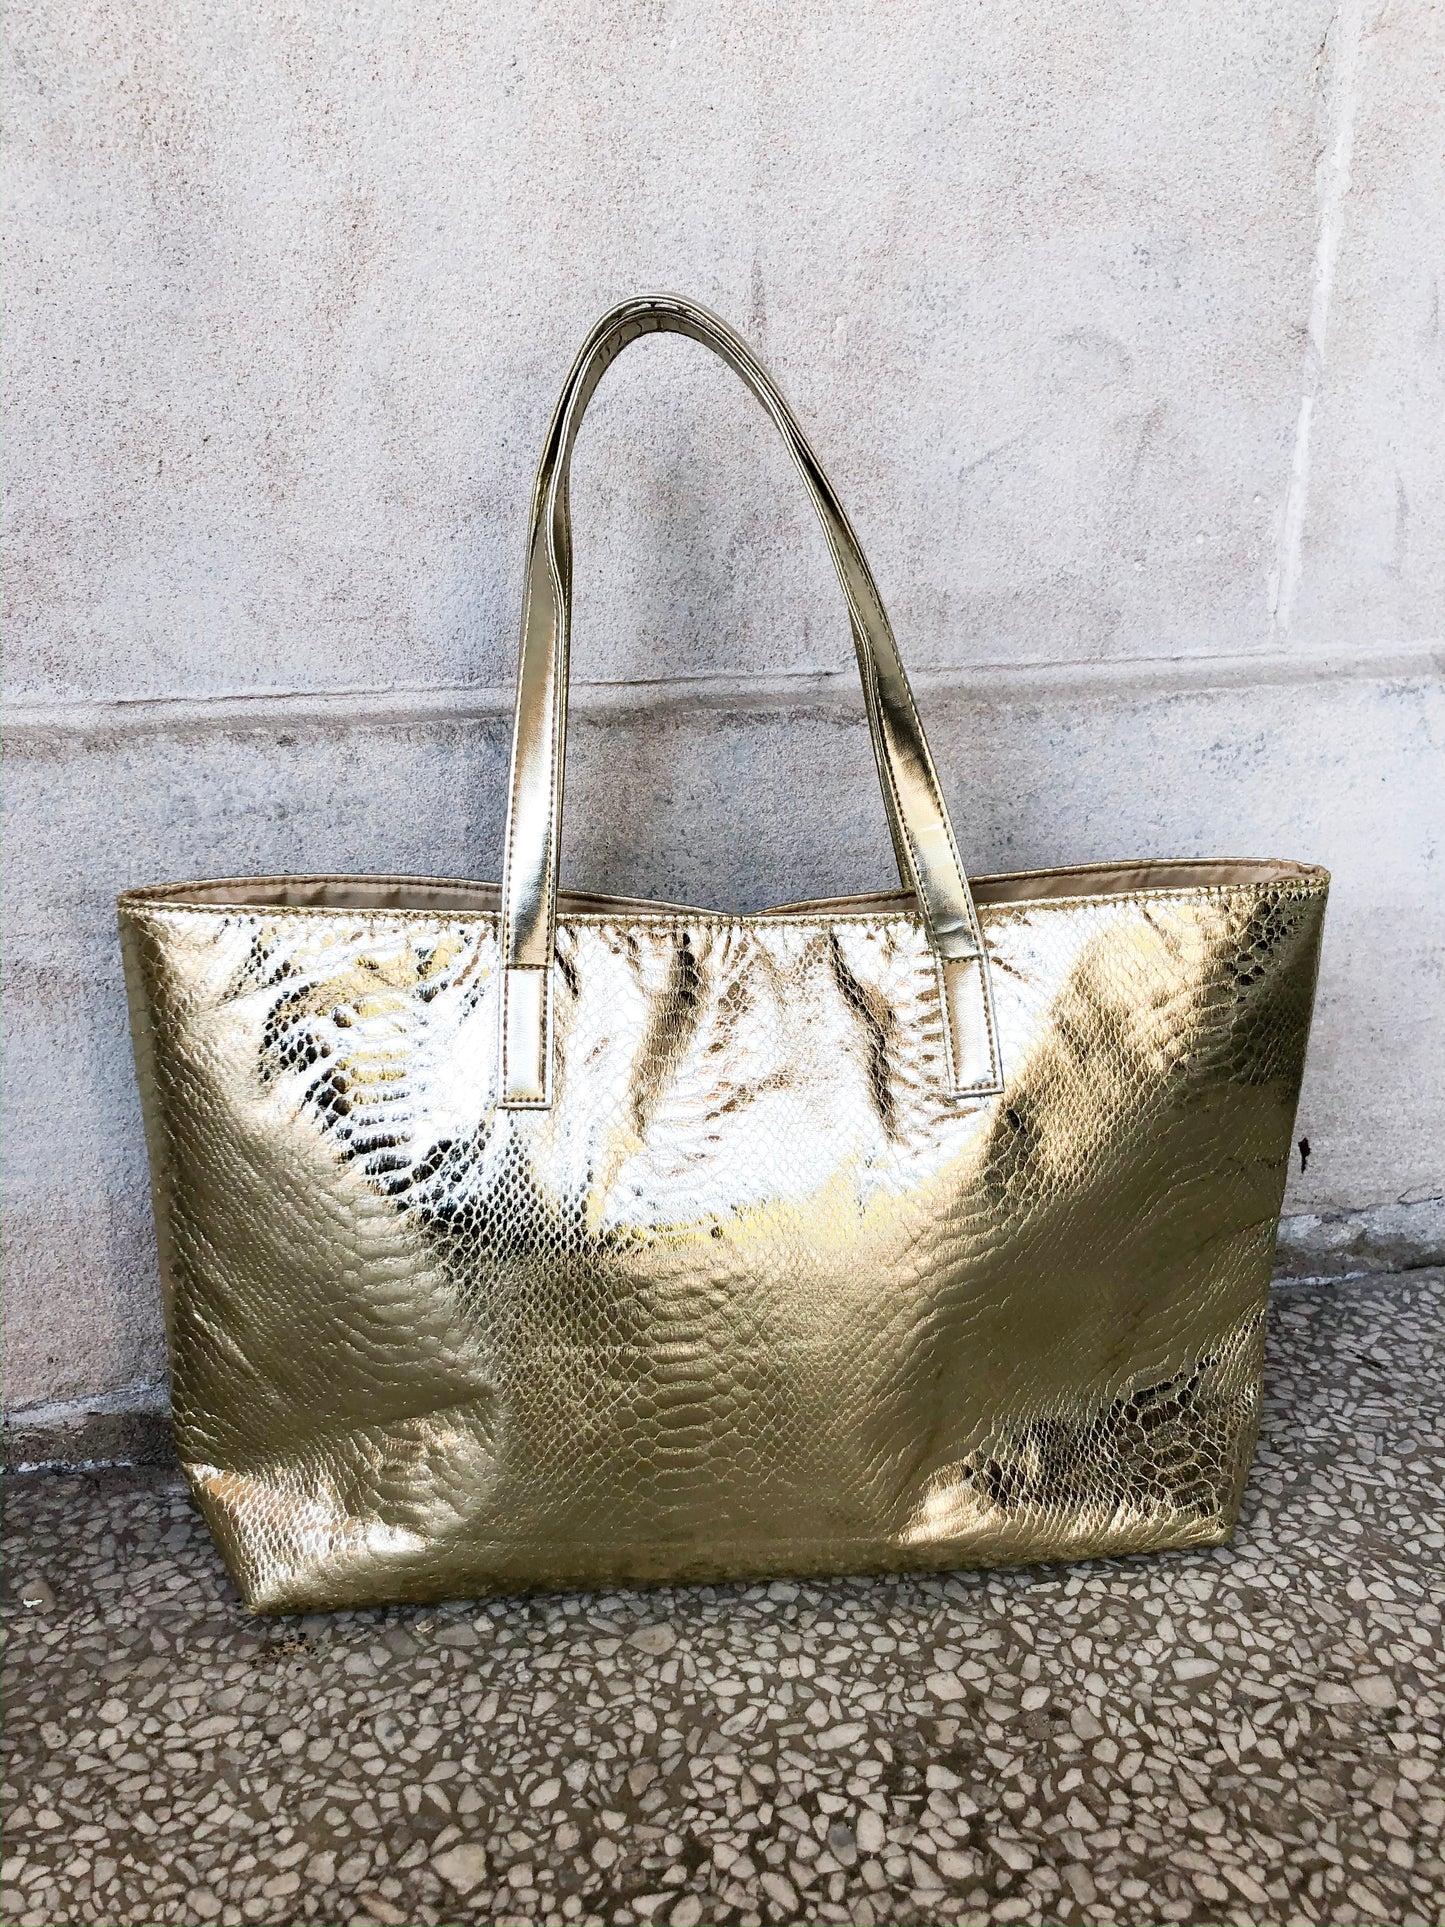 Gold Python Tote Bag - Le Prix Fashion & Consulting